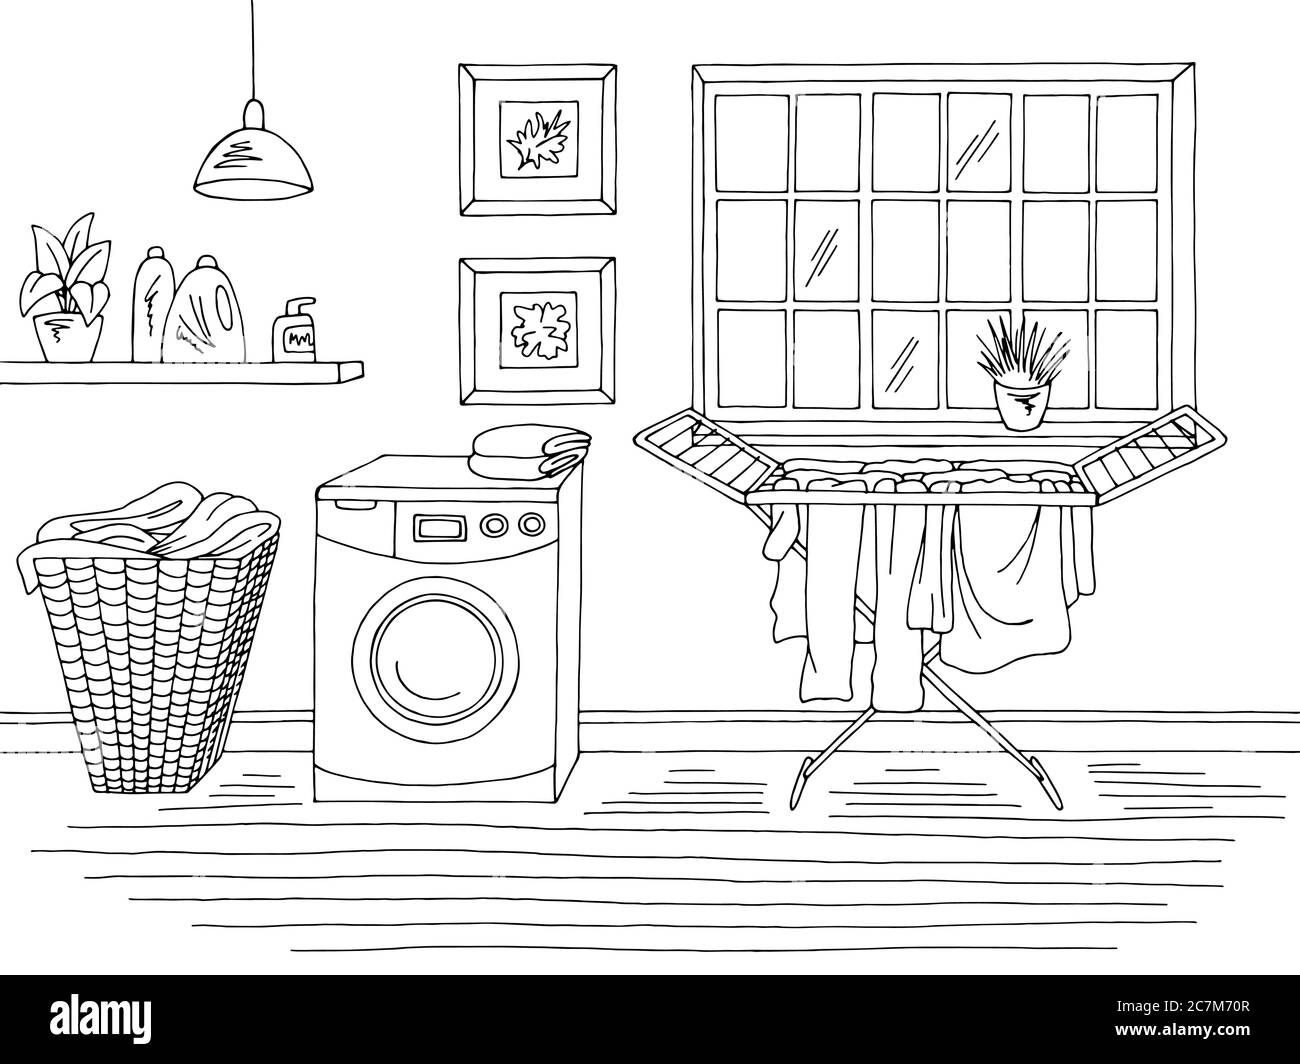 Laundry room home interior graphic black white sketch illustration vector Stock Vector